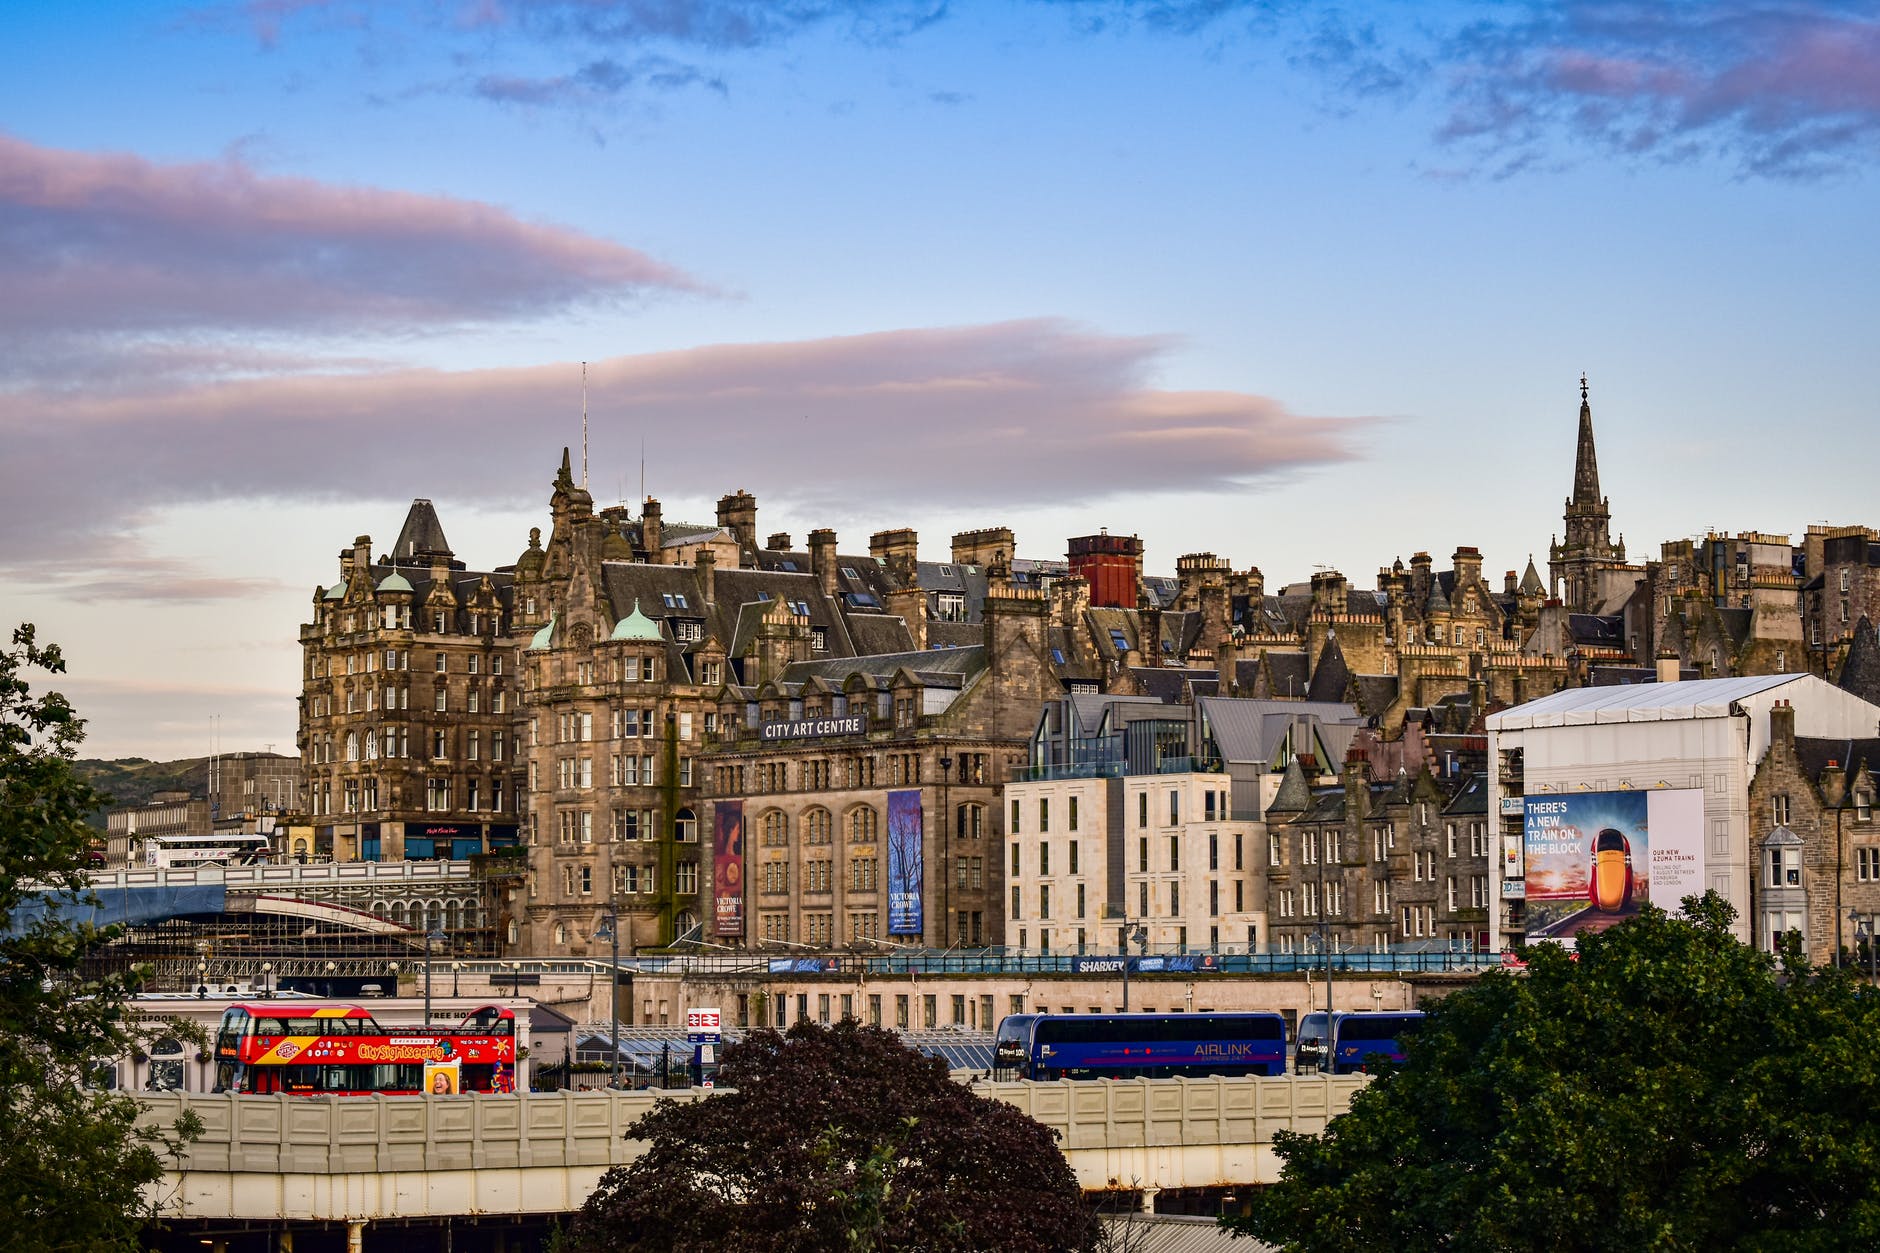 Edinburgh, Scotland © |  Photo by saifullah  hafeel on <a href="https://www.pexels.com/photo/a-scenic-view-of-buildings-in-edinburgh-5943647/" rel="nofollow">Pexels.com</a>